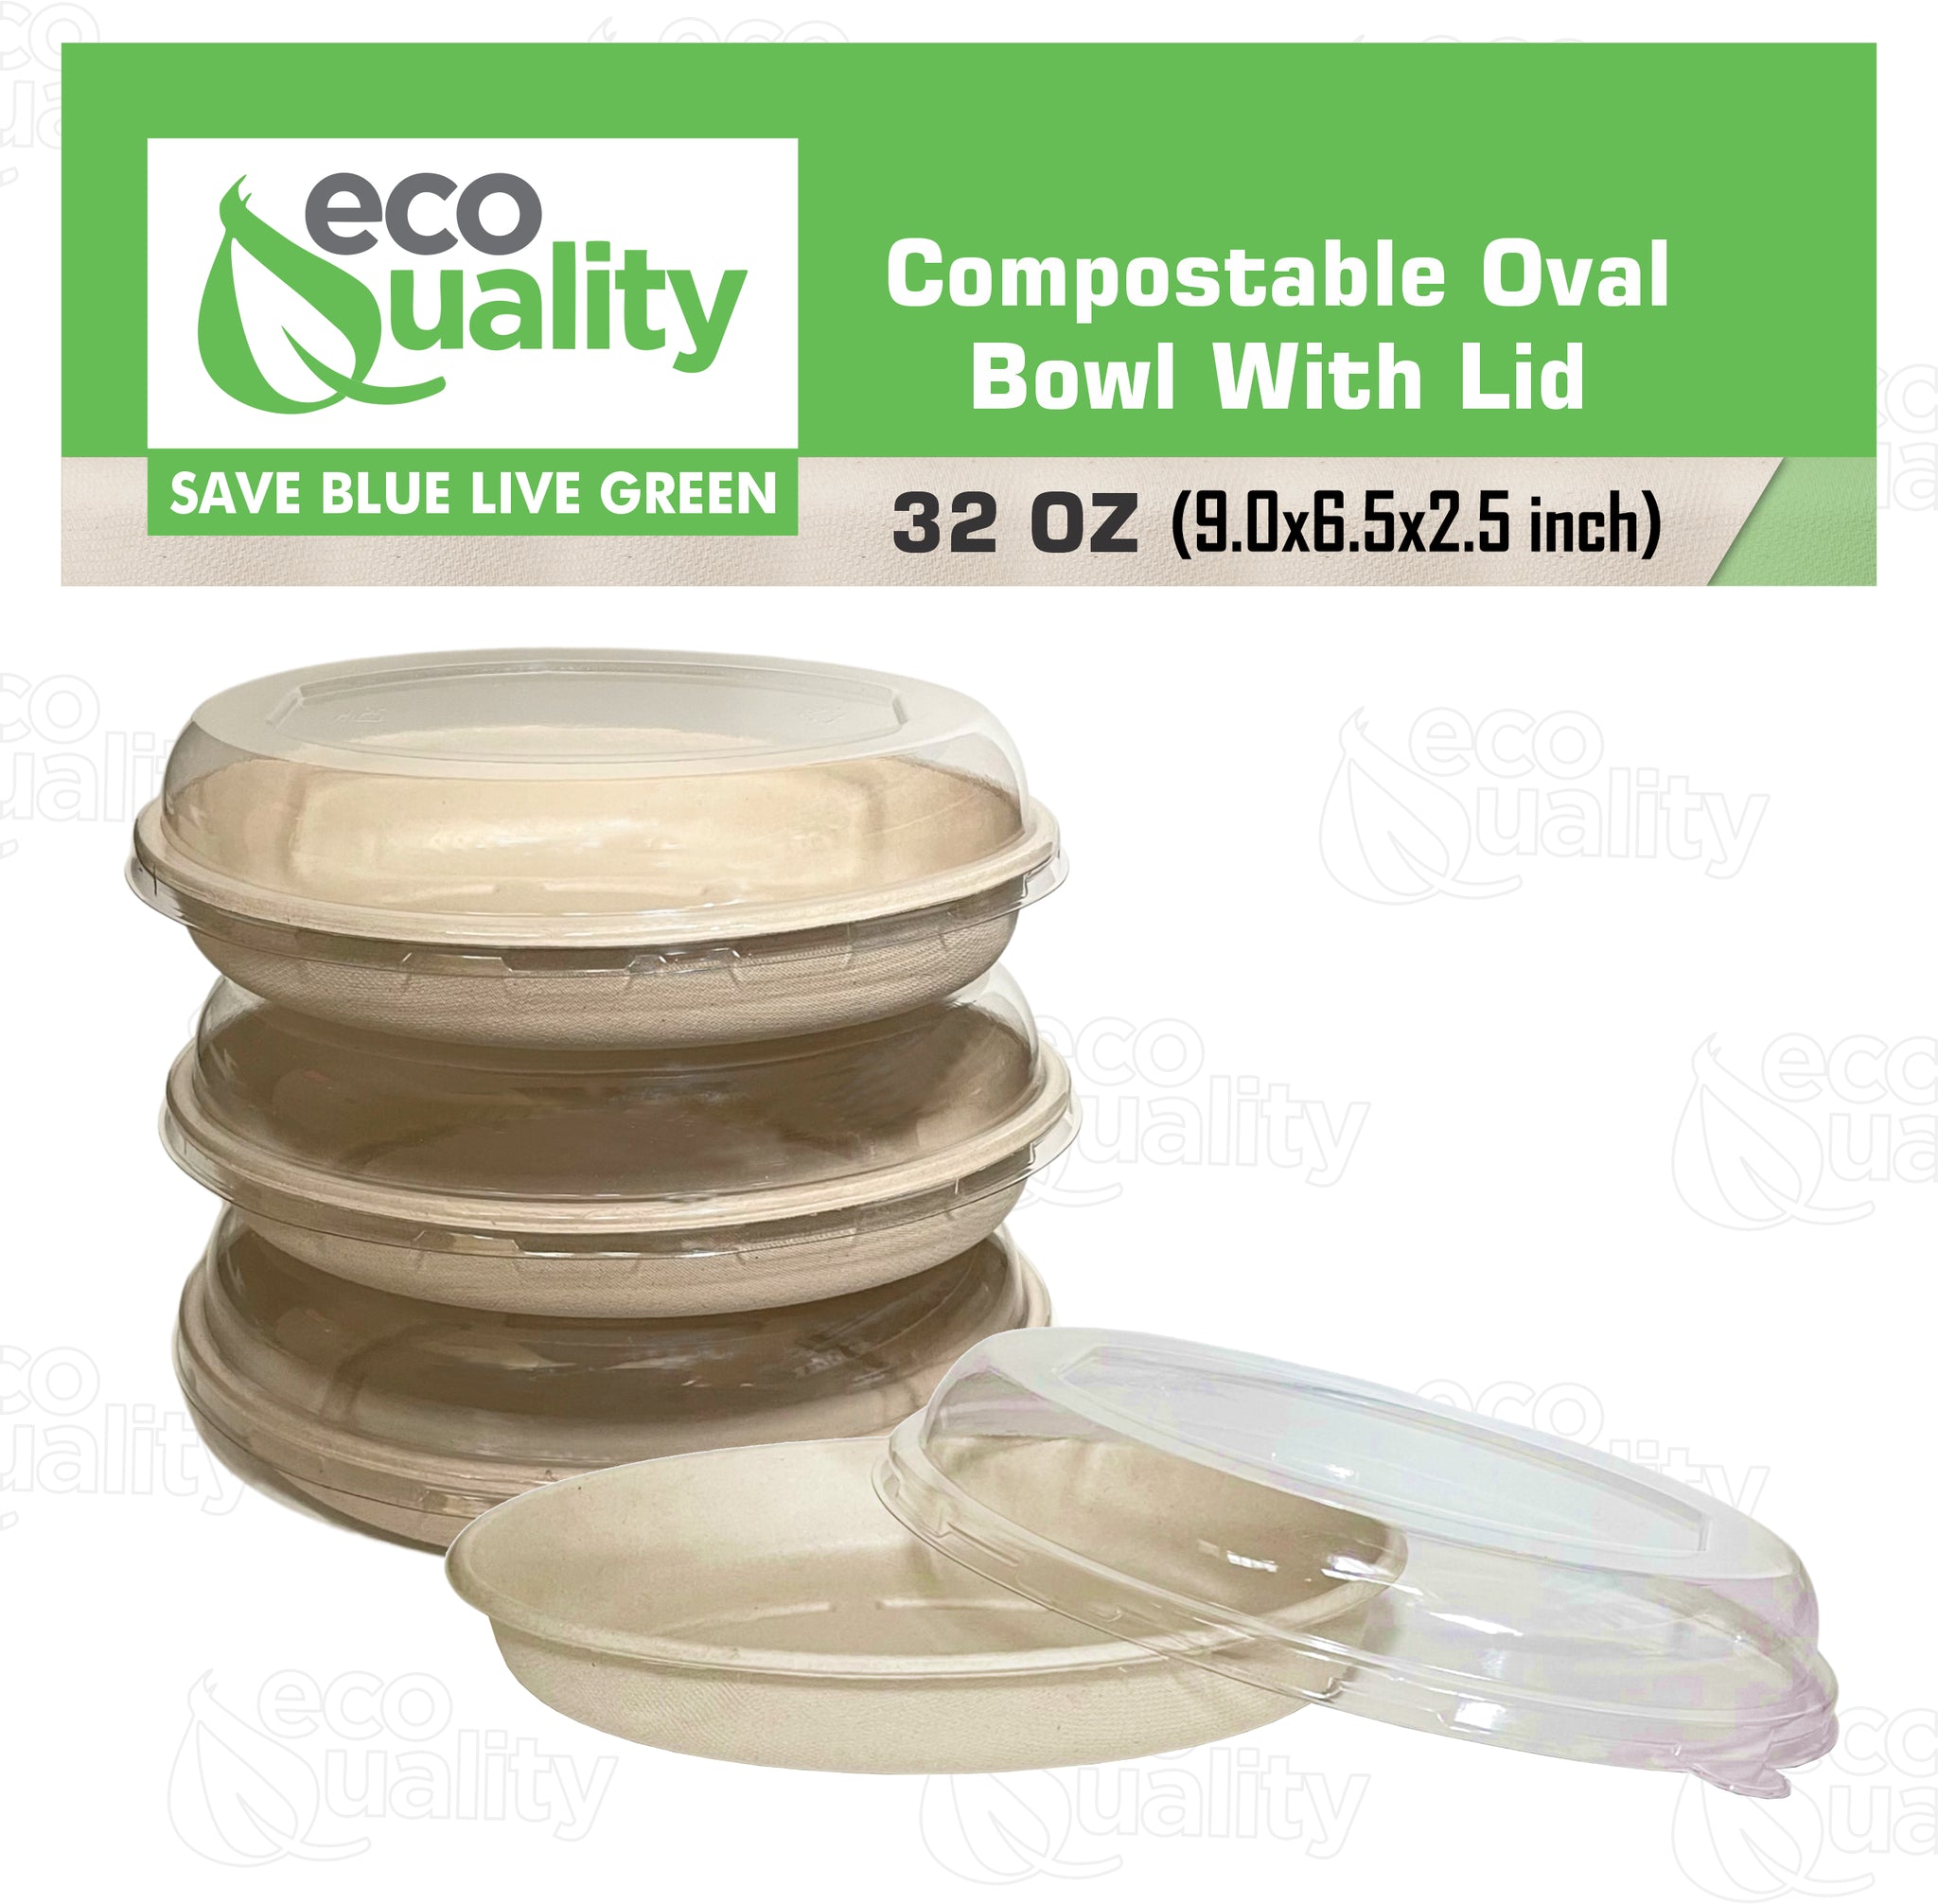 compostable zerowaste ecofriendly plasticfree kraftbowl disposableproducts Microwavesafe LeakResistant bowl Biodegradable Bowls sugarcane bowl disposable bowl heavyduty bowl salad bowl oval bowl